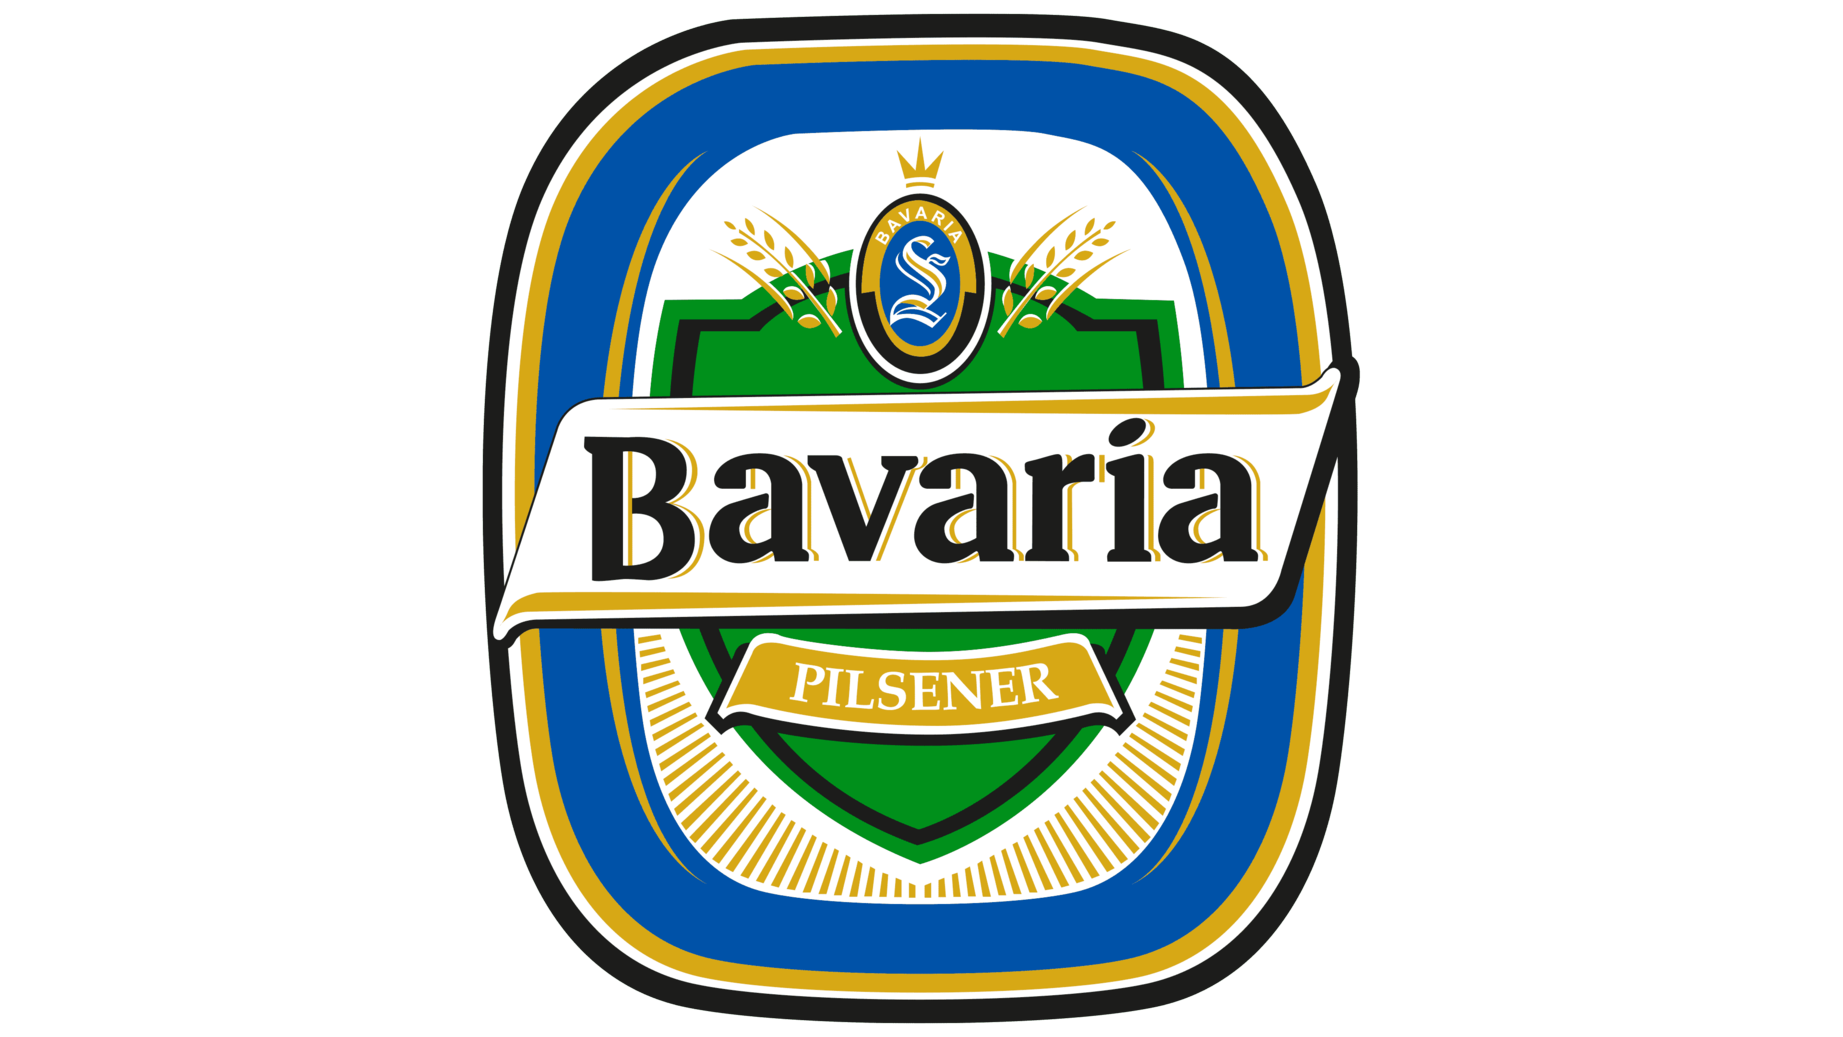 Bavaria sign before 2009